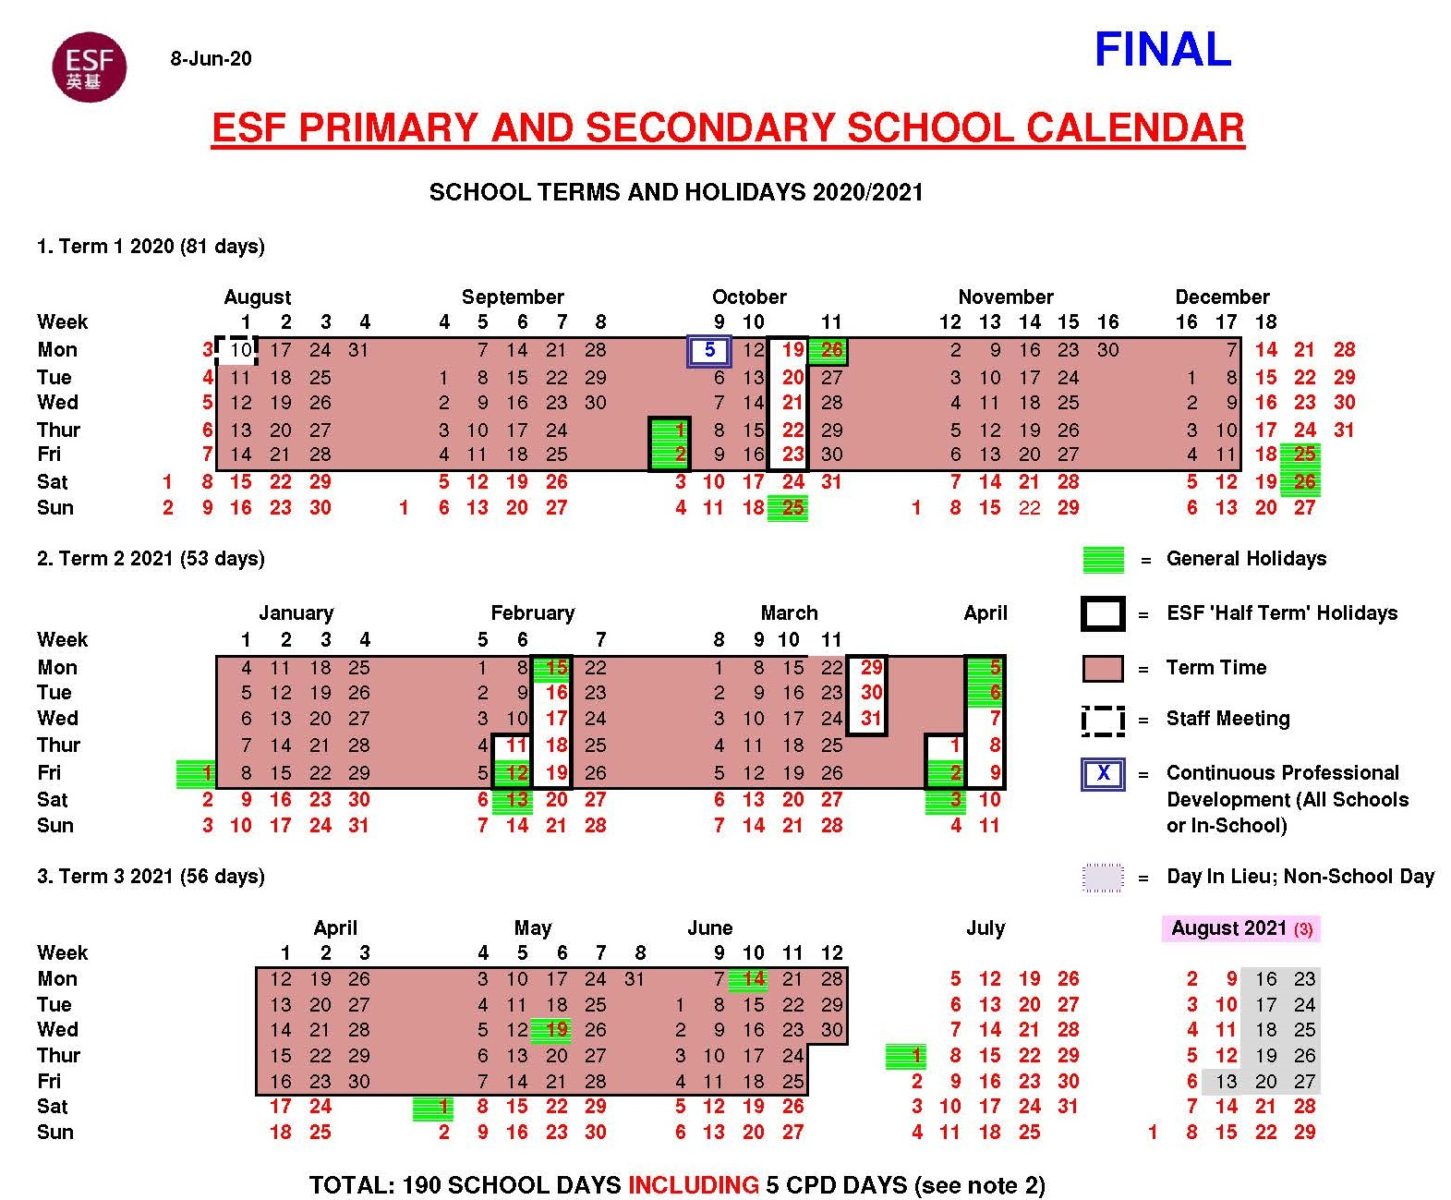 English Schools Foundation 22 International Schools In Hk Esf Primary Secondary School Calendar 2020 21 Final English Schools Foundation 22 International Schools In Hk